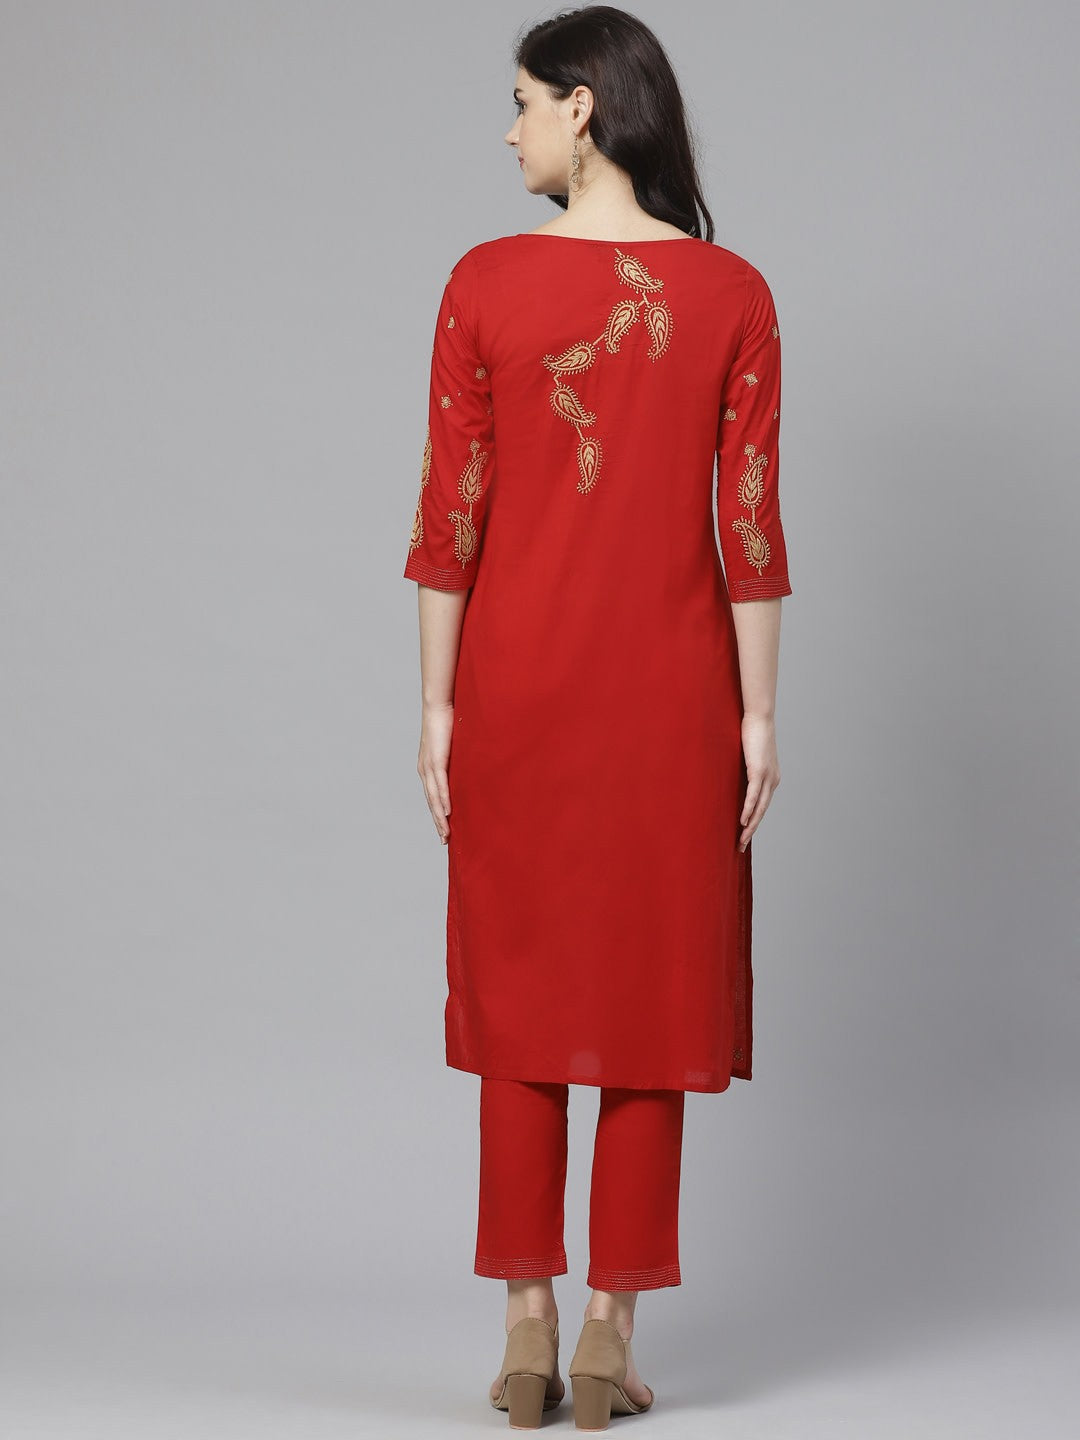 Embroidered-Red-Lucknow-Chikankari-Kurta-Set